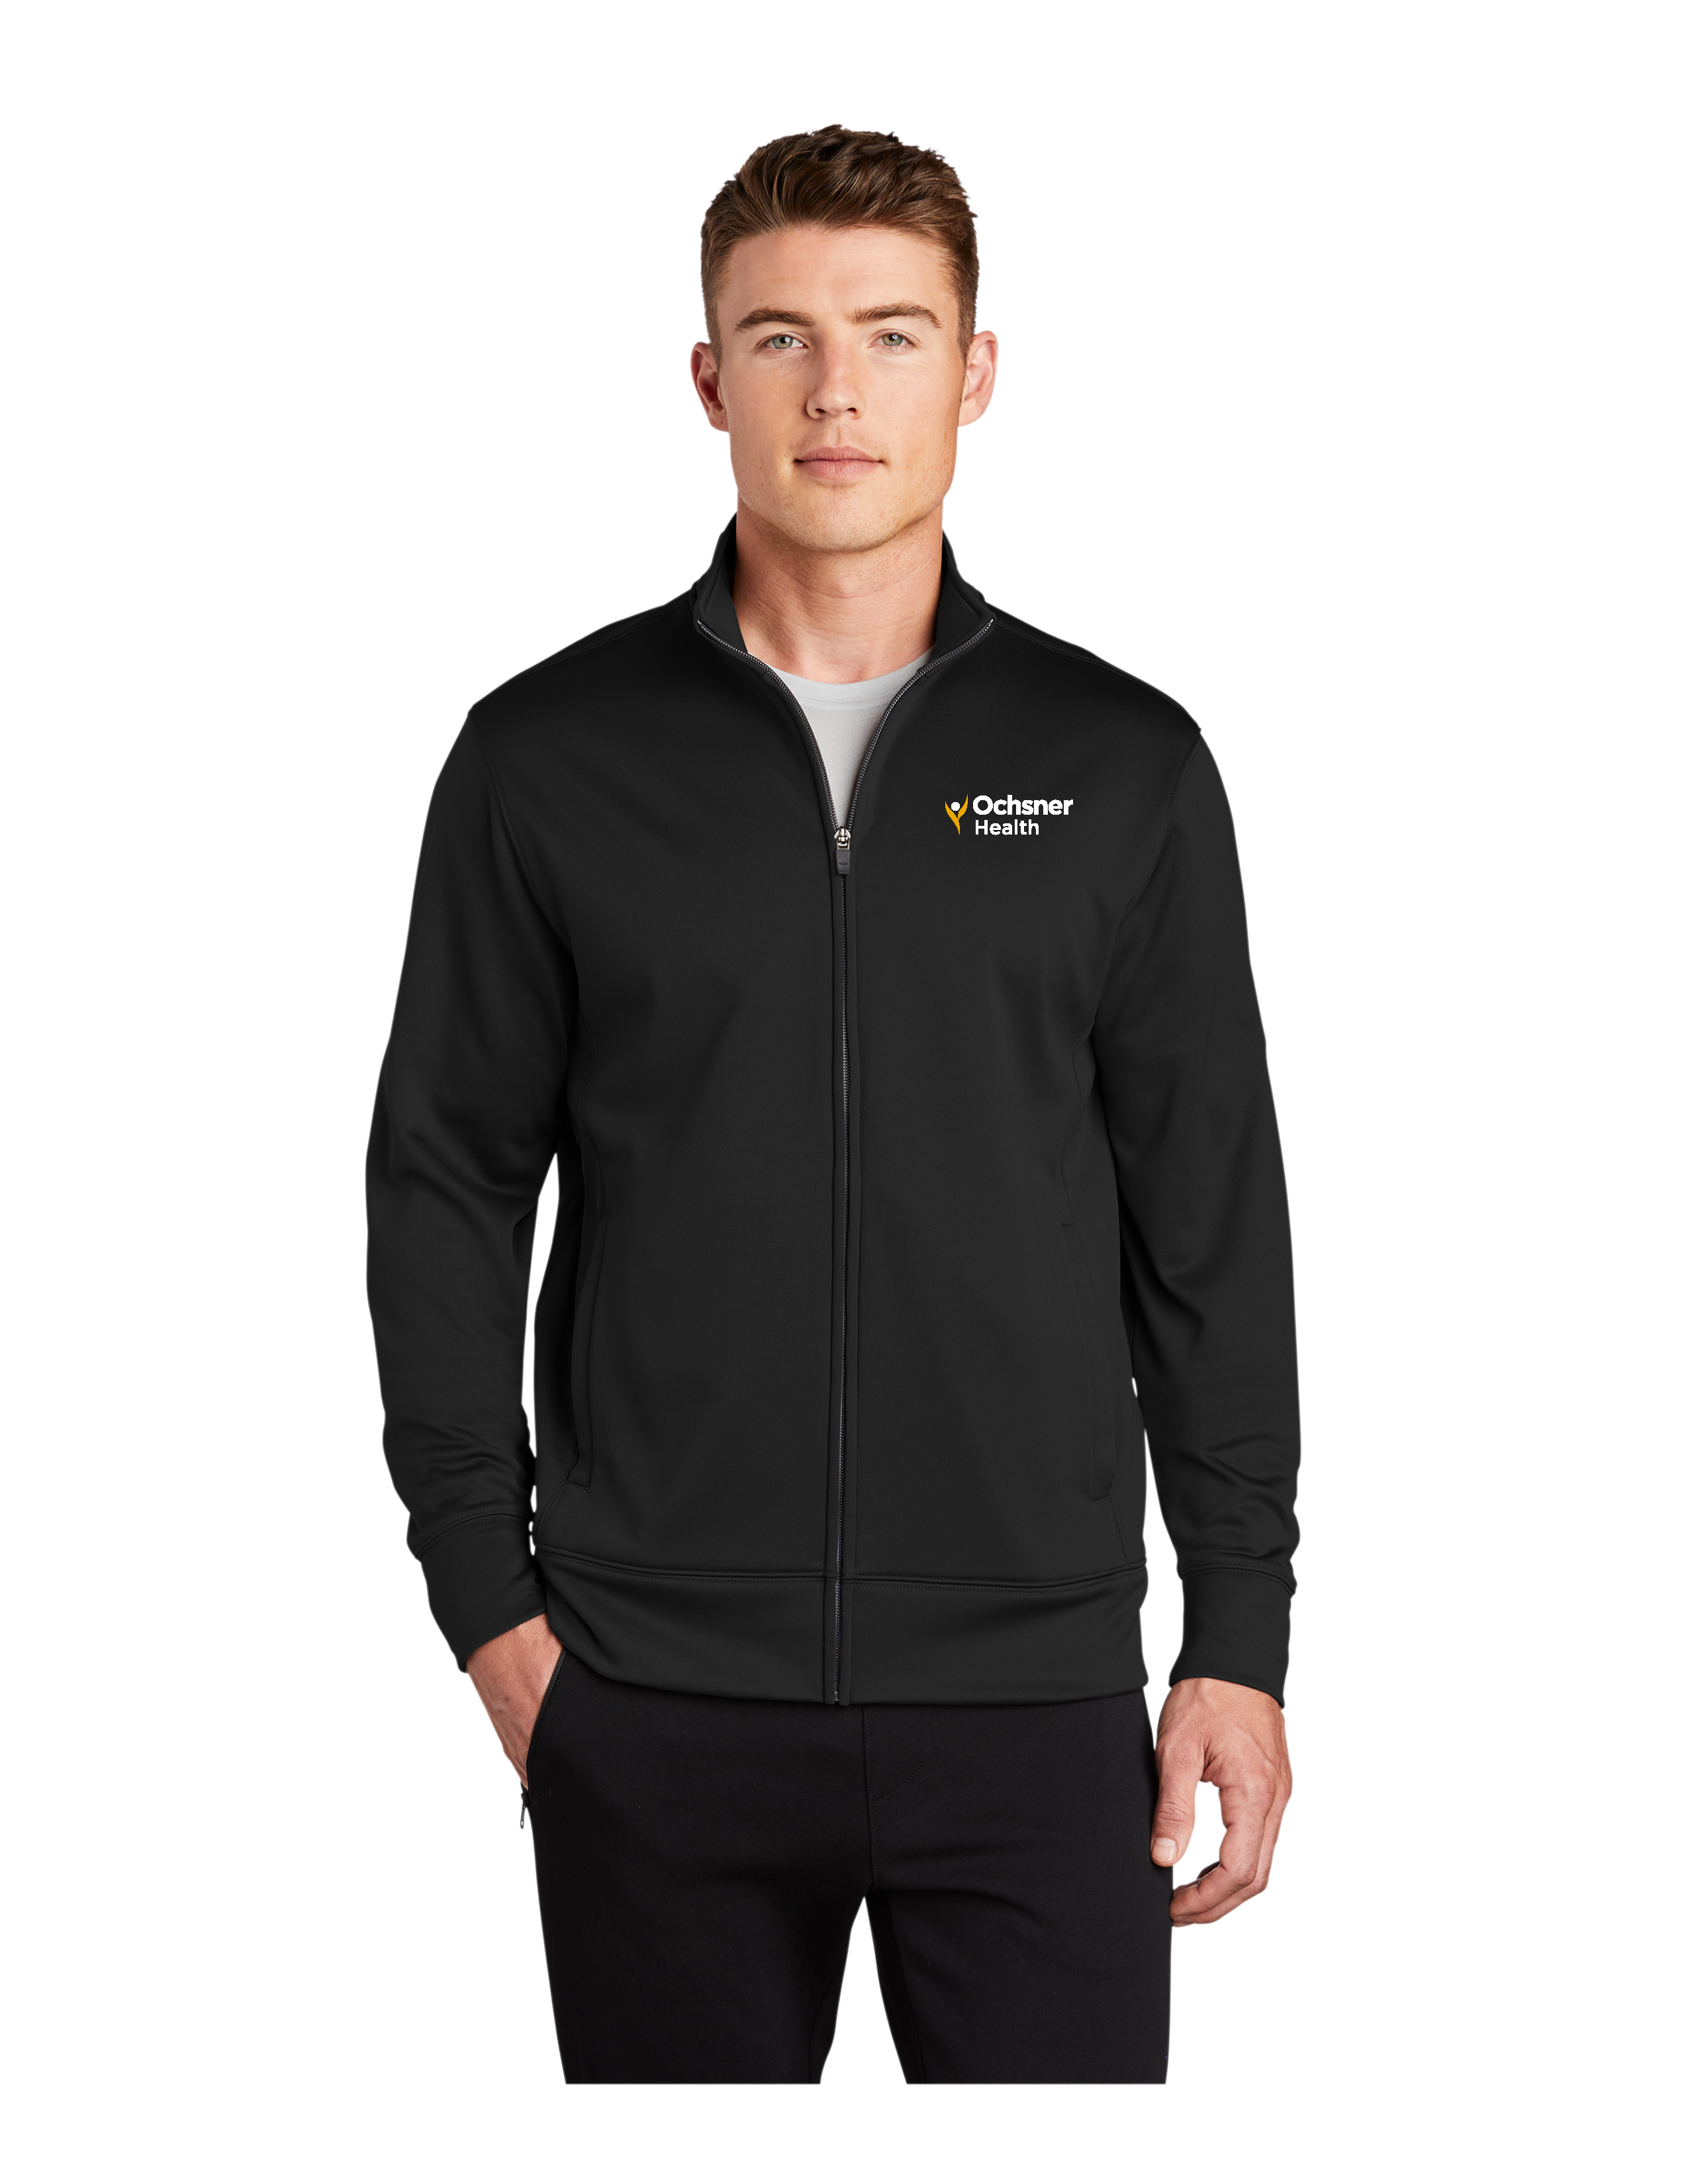 Men's Sportwick Fleece Jacket, Black, large image number 1